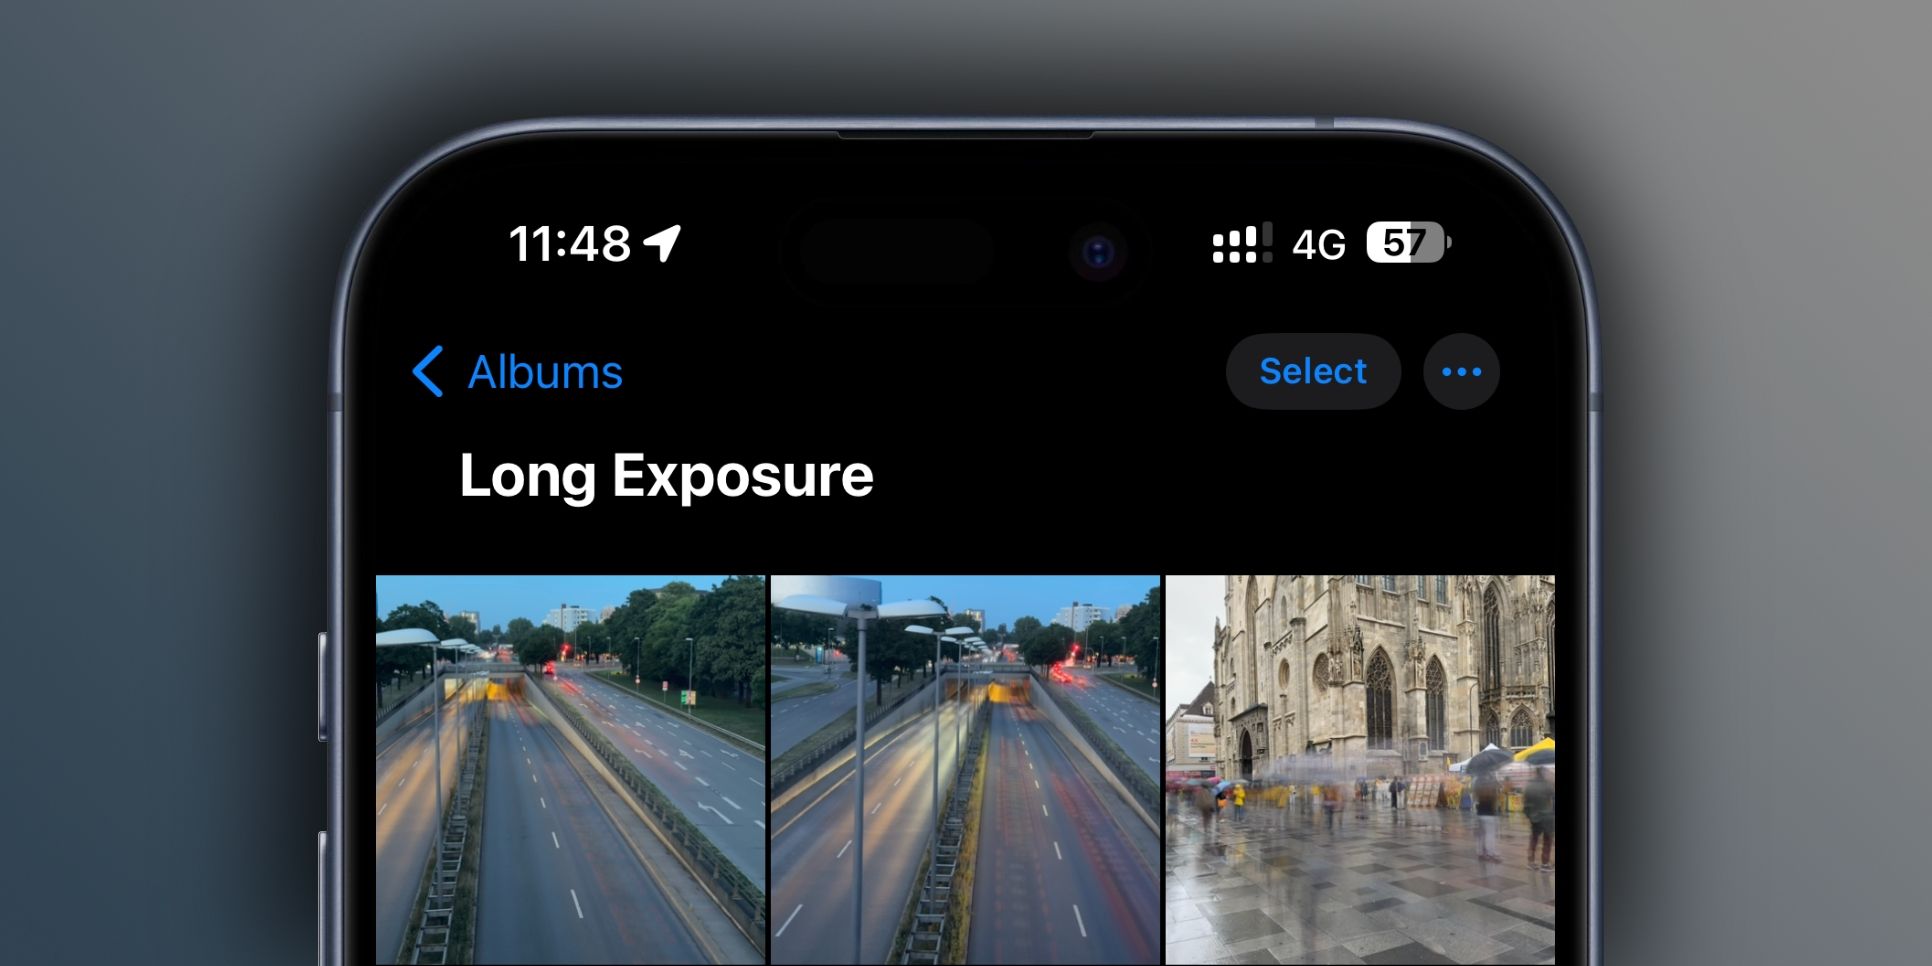 Closeup of the Long Exposure album in the iPhone's Photos app